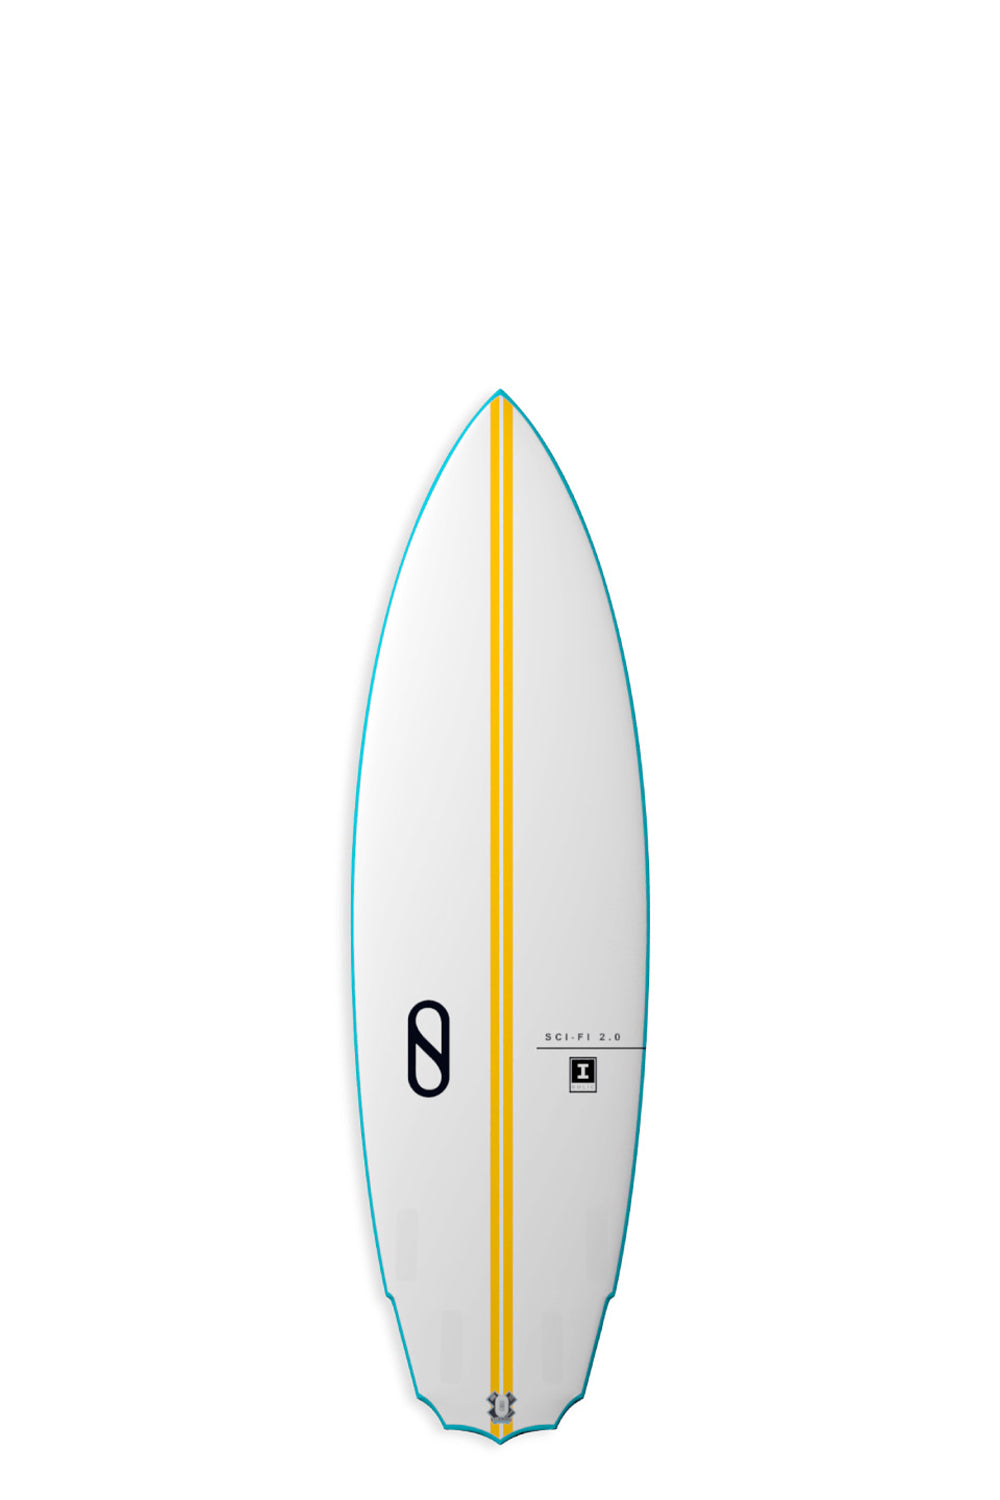 Slater Designs Ibolic SCI-FI 2.0 GROM Surfboard